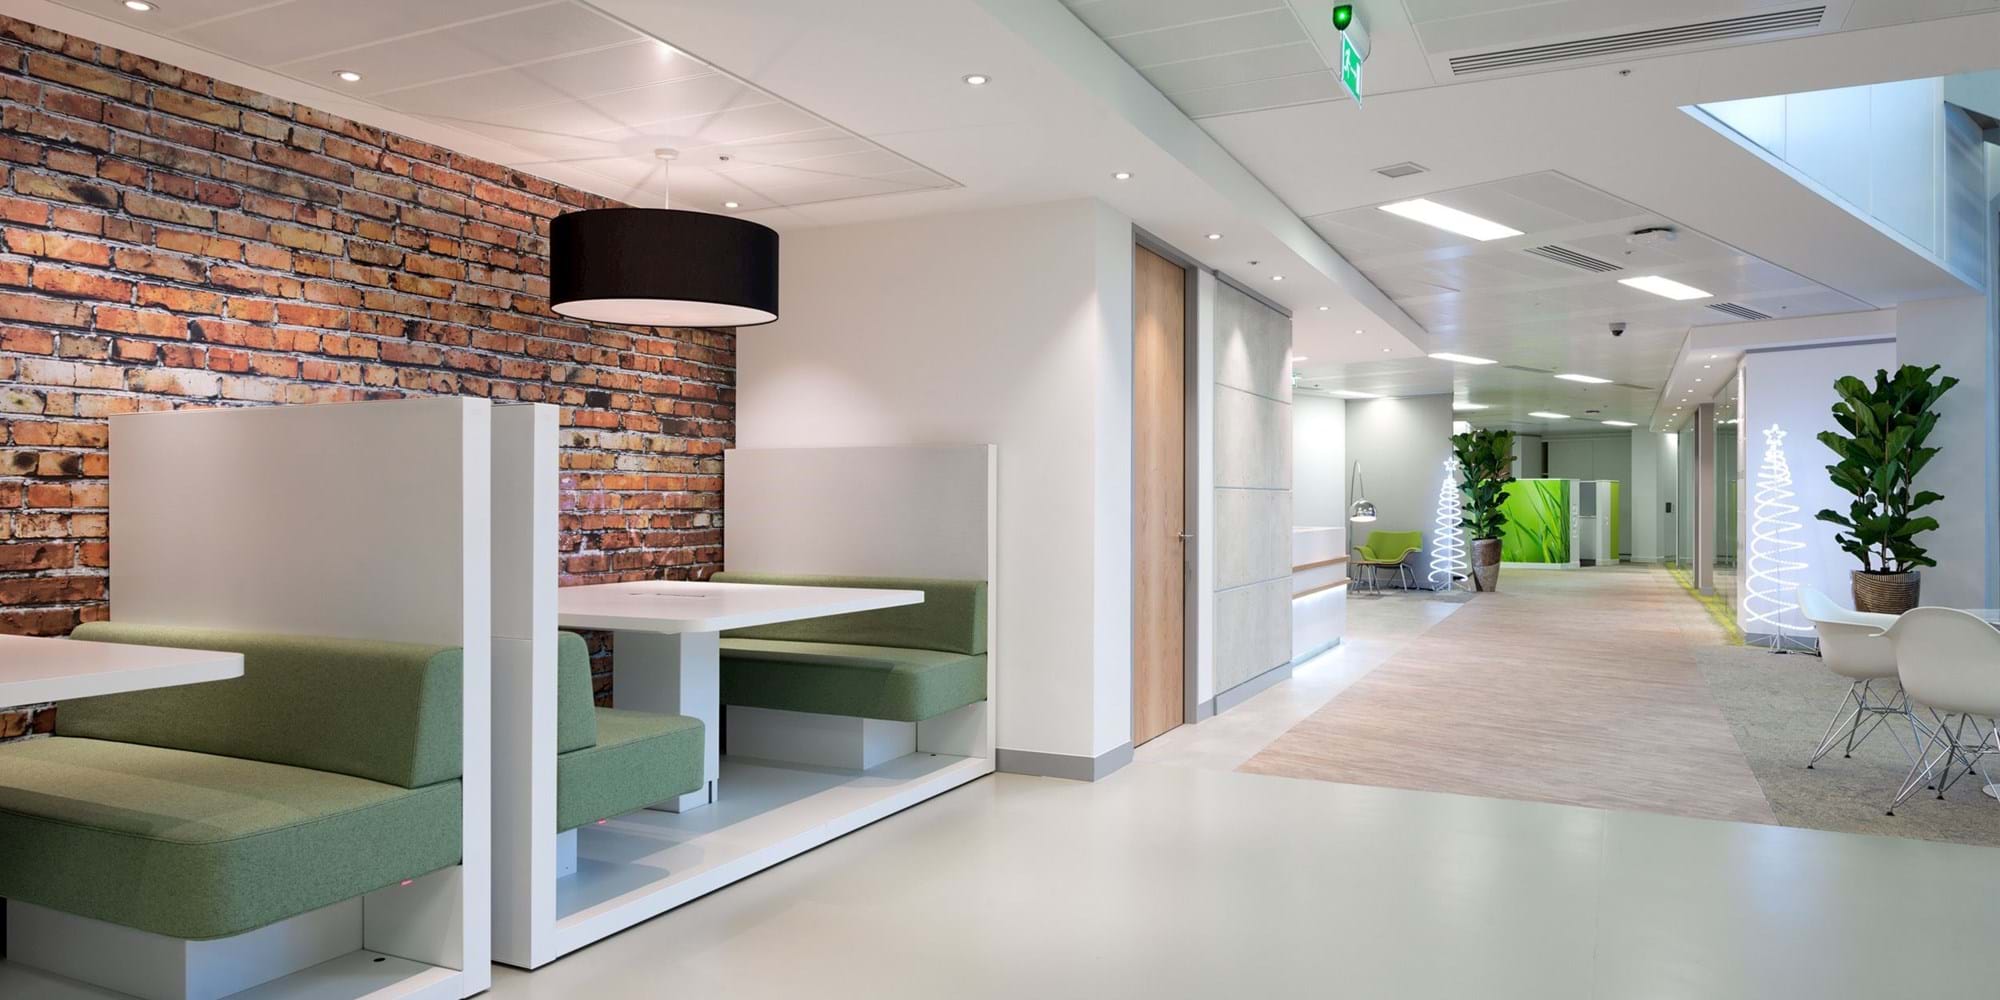 Modus Workspace office design, fit out and refurbishment - Reed Elsevier - Breakout - Reed Elsevier 07 darker highres sRGB.jpg